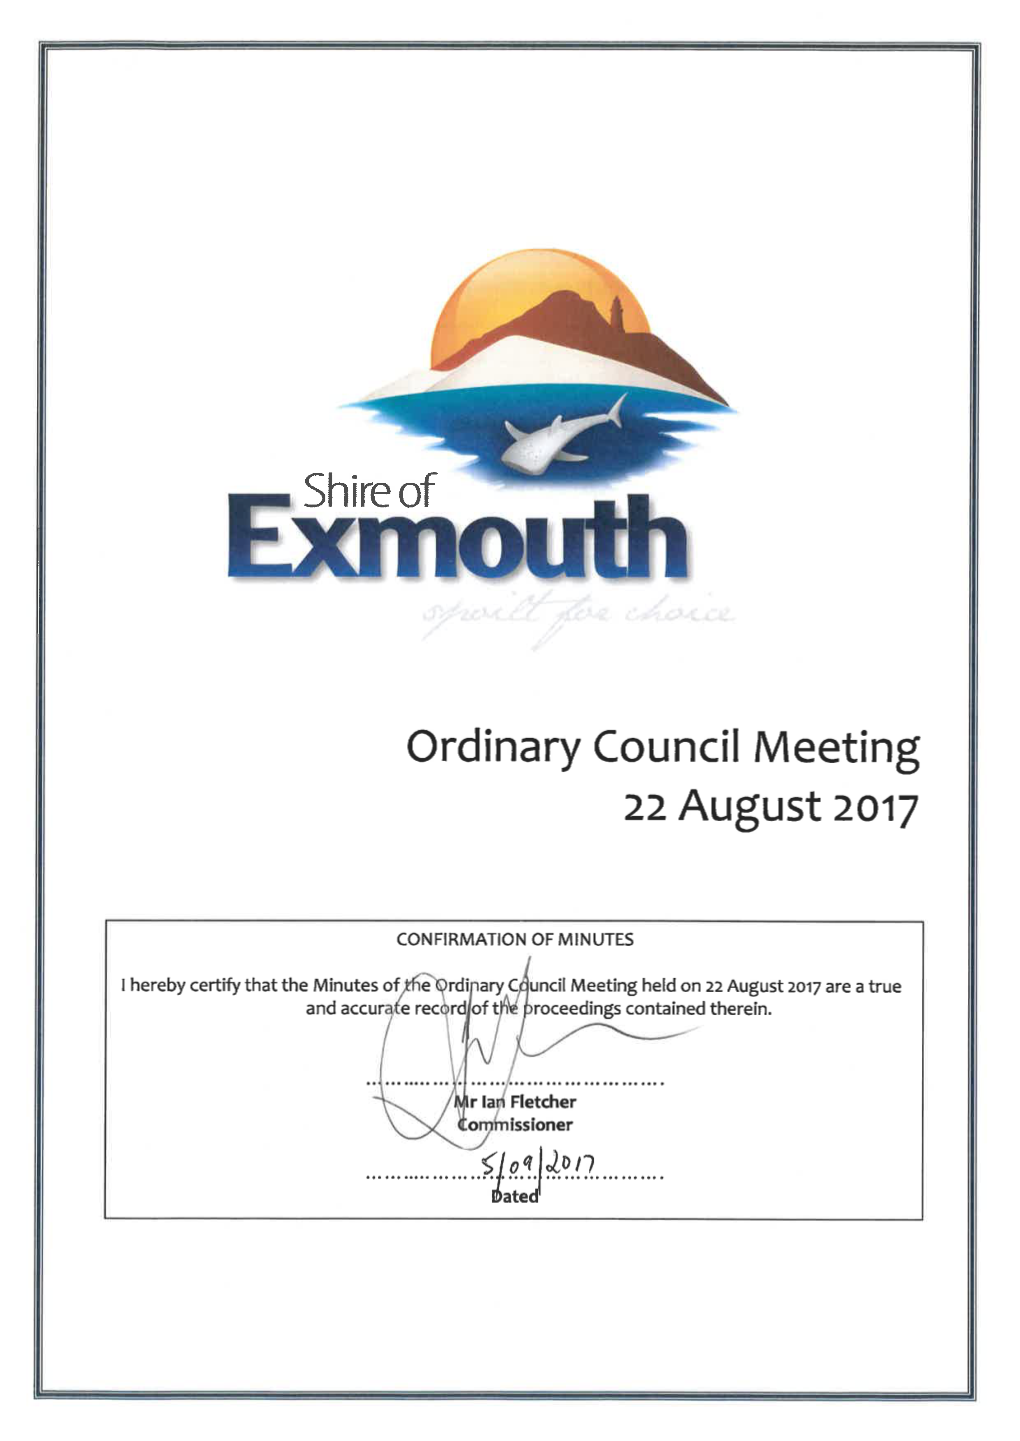 Ordinary Council Meeting Minutes